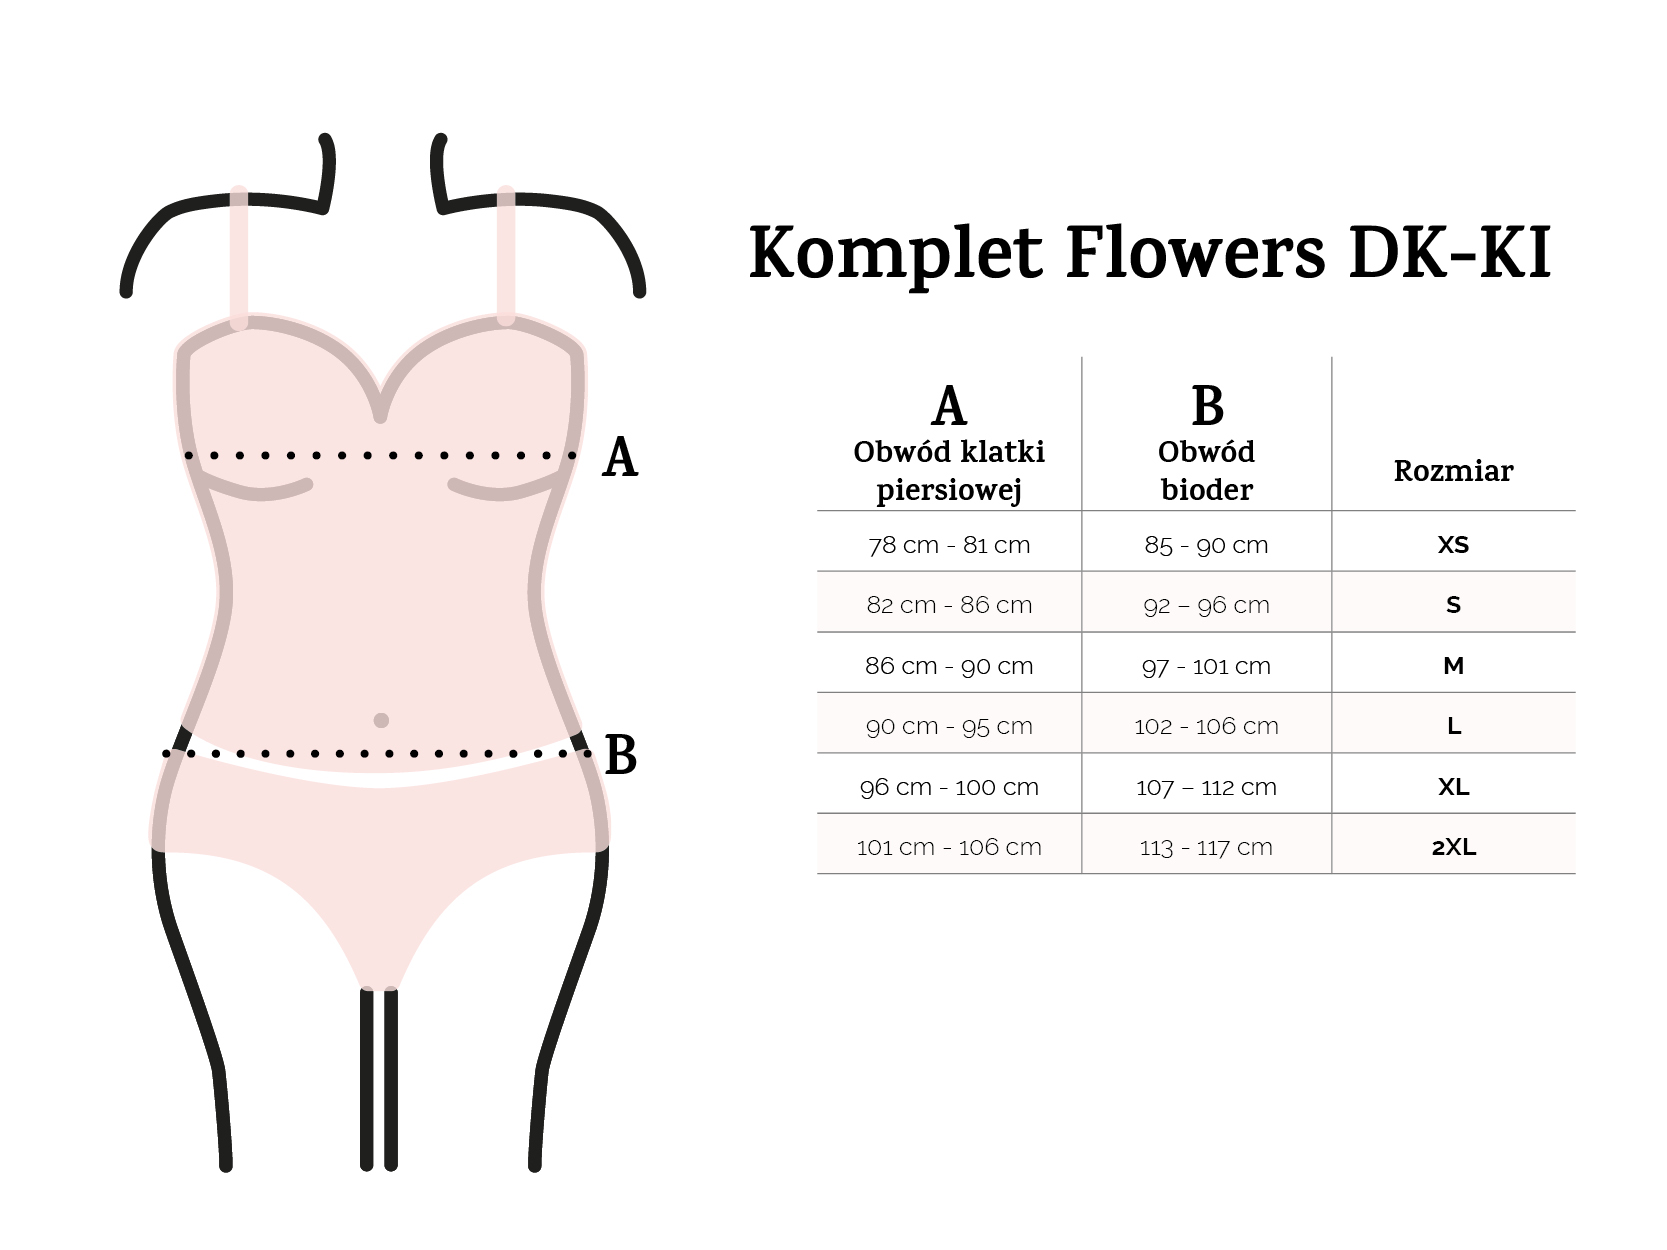 Komplet Flowers DK-KI